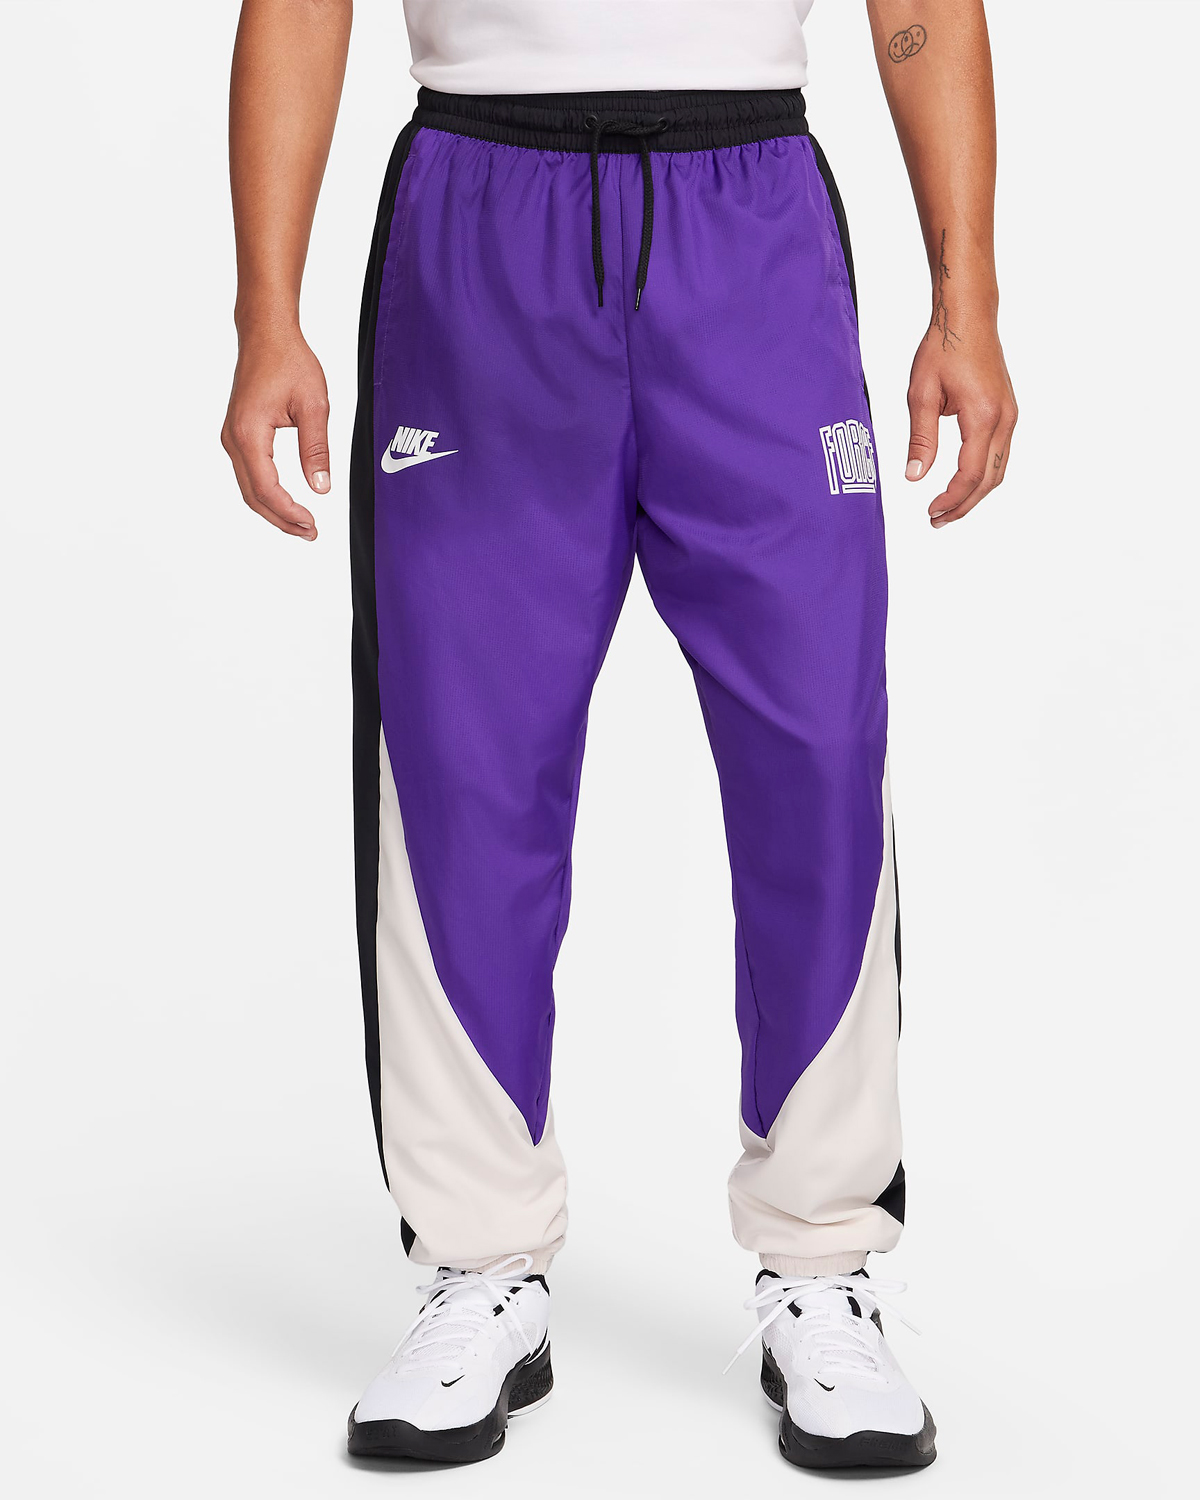 Nike-Starting-5-Pants-Pants-Field-Purple